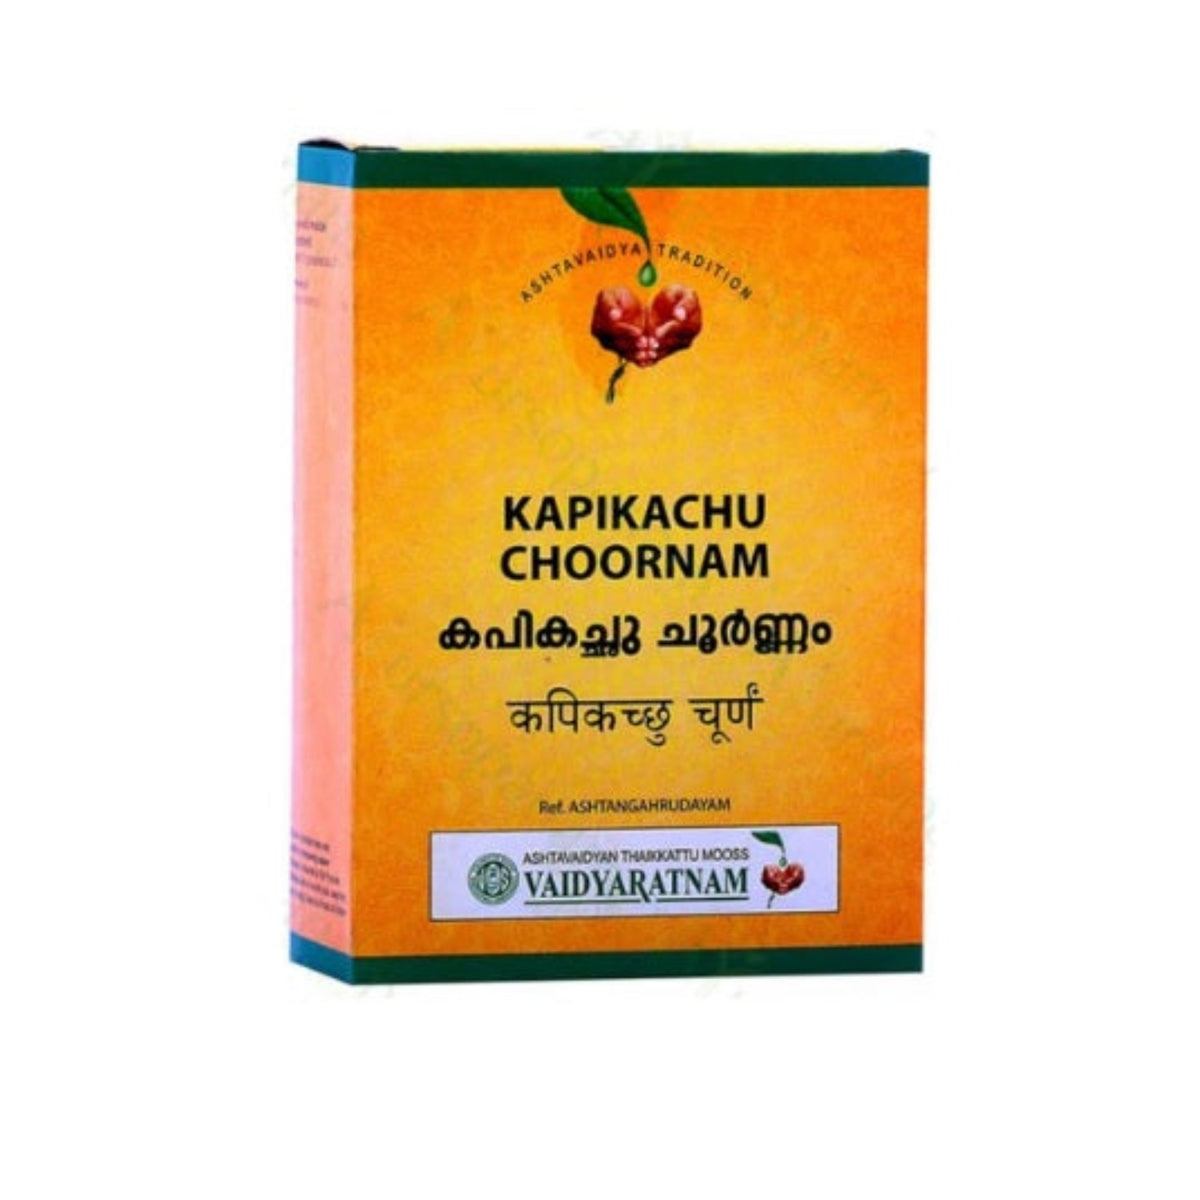 Vaidyaratnam Ayurvedic Kapikachu Choornam Powder 100g